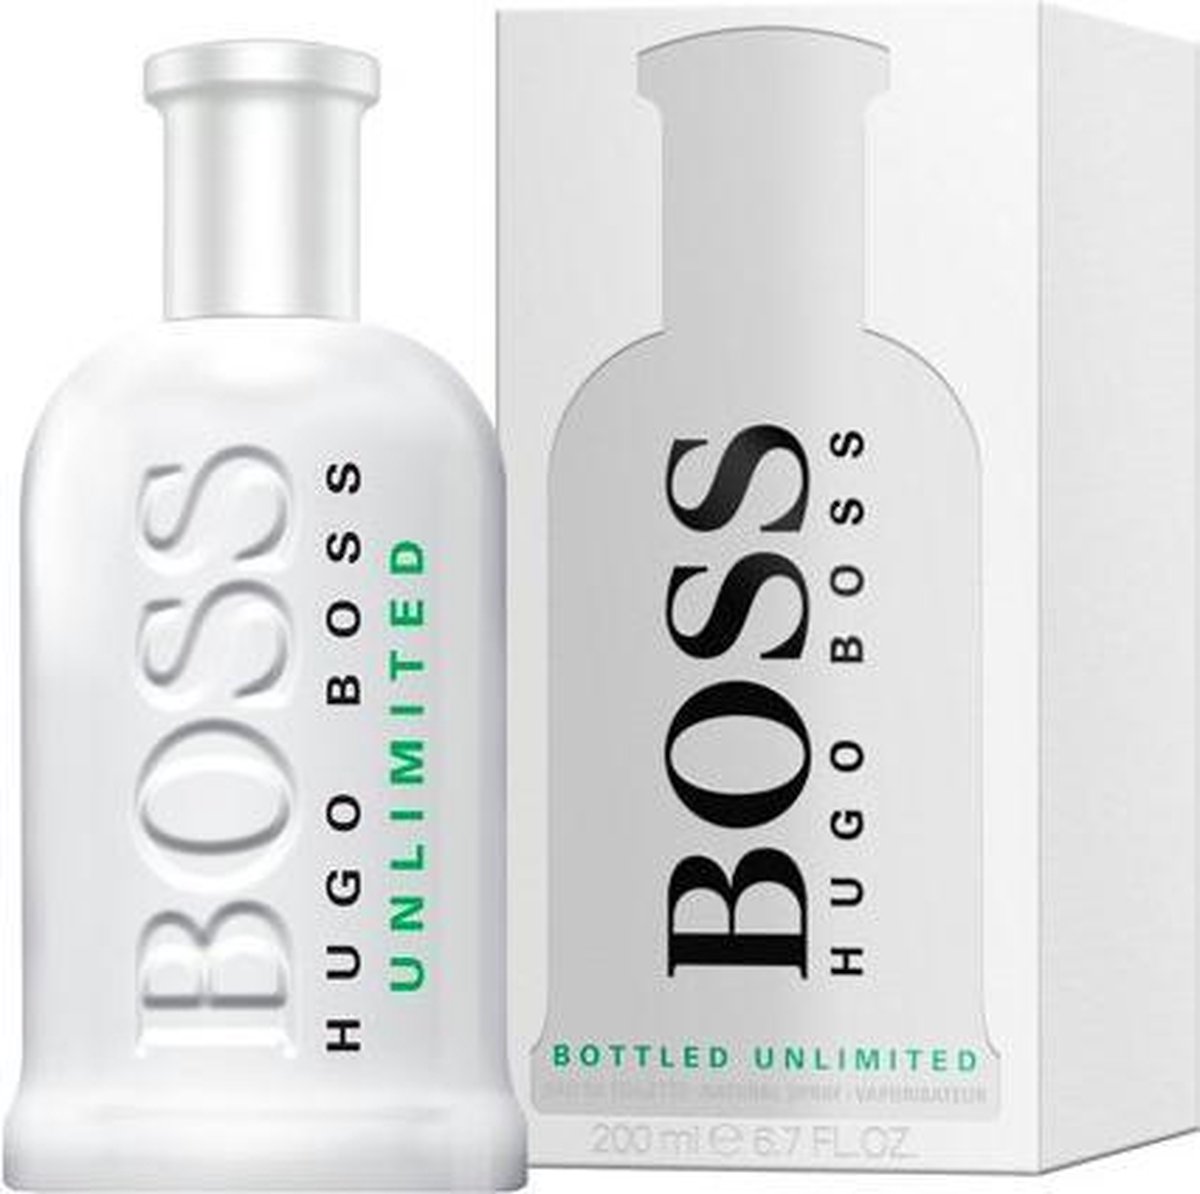 Canada wasmiddel beest Hugo Boss Bottled Unlimited 200 ml - Eau de Toilette - Herenparfum | bol.com